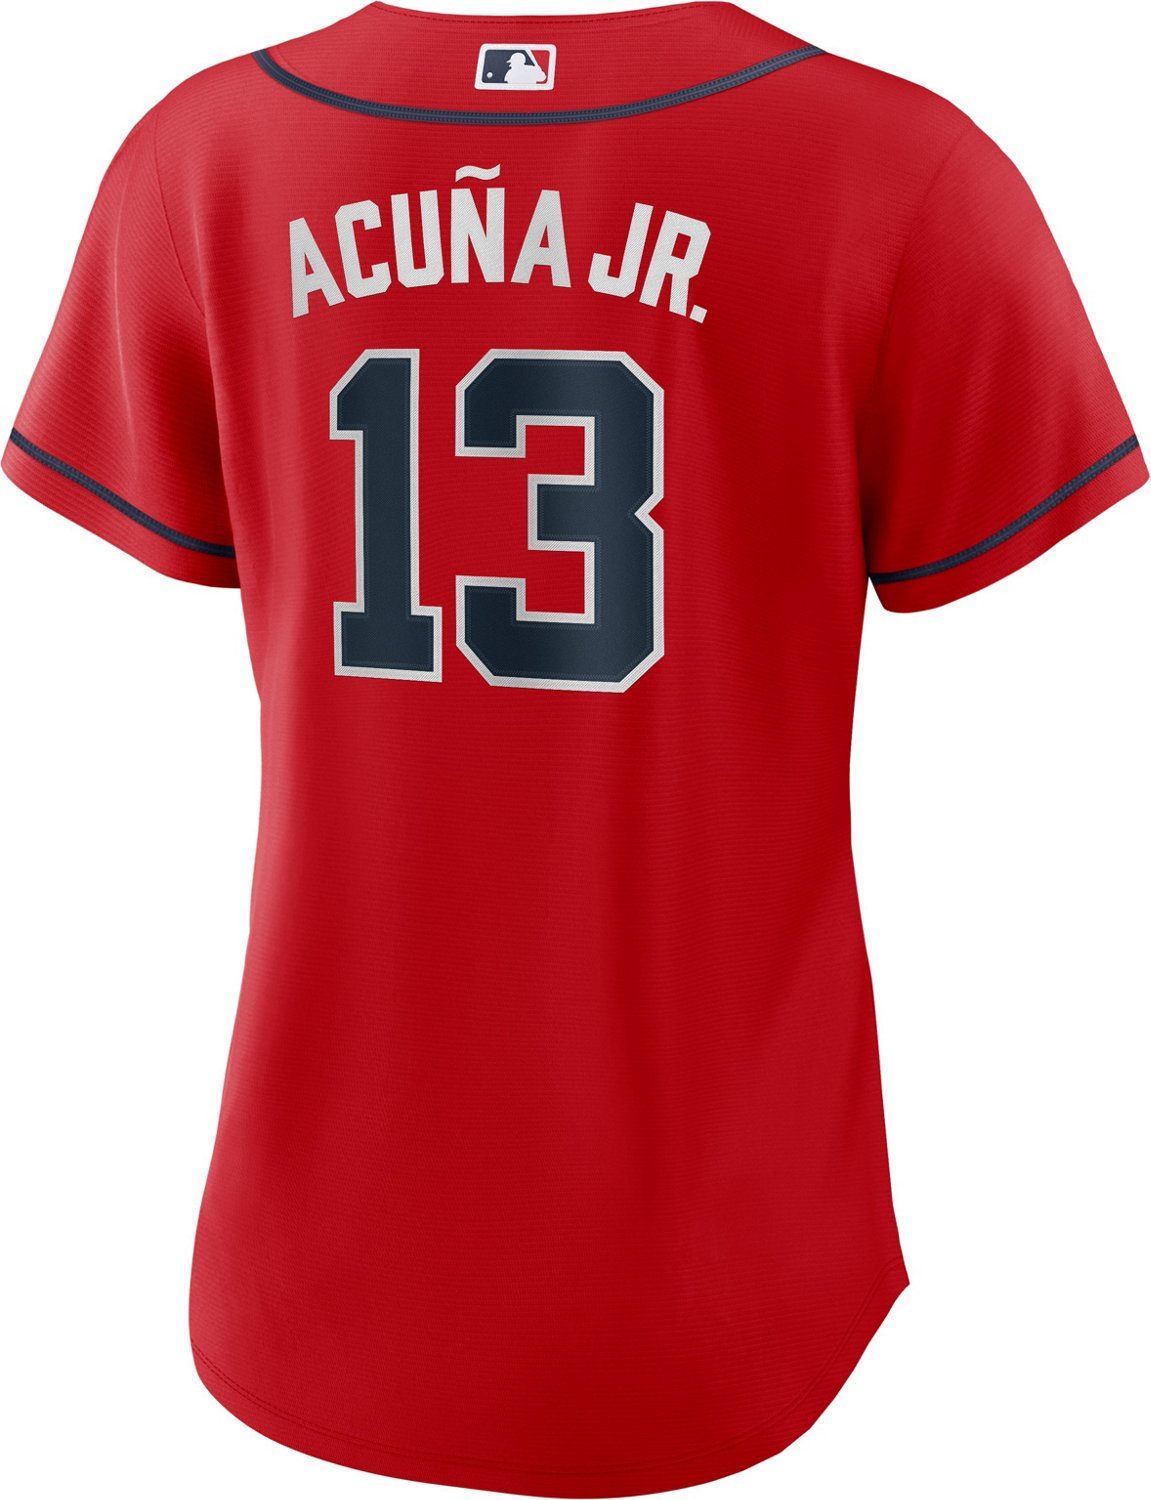 Men's Ronald Acuna Jr. #13 "Atlanta Bravess" Gray Stiched  Jersey